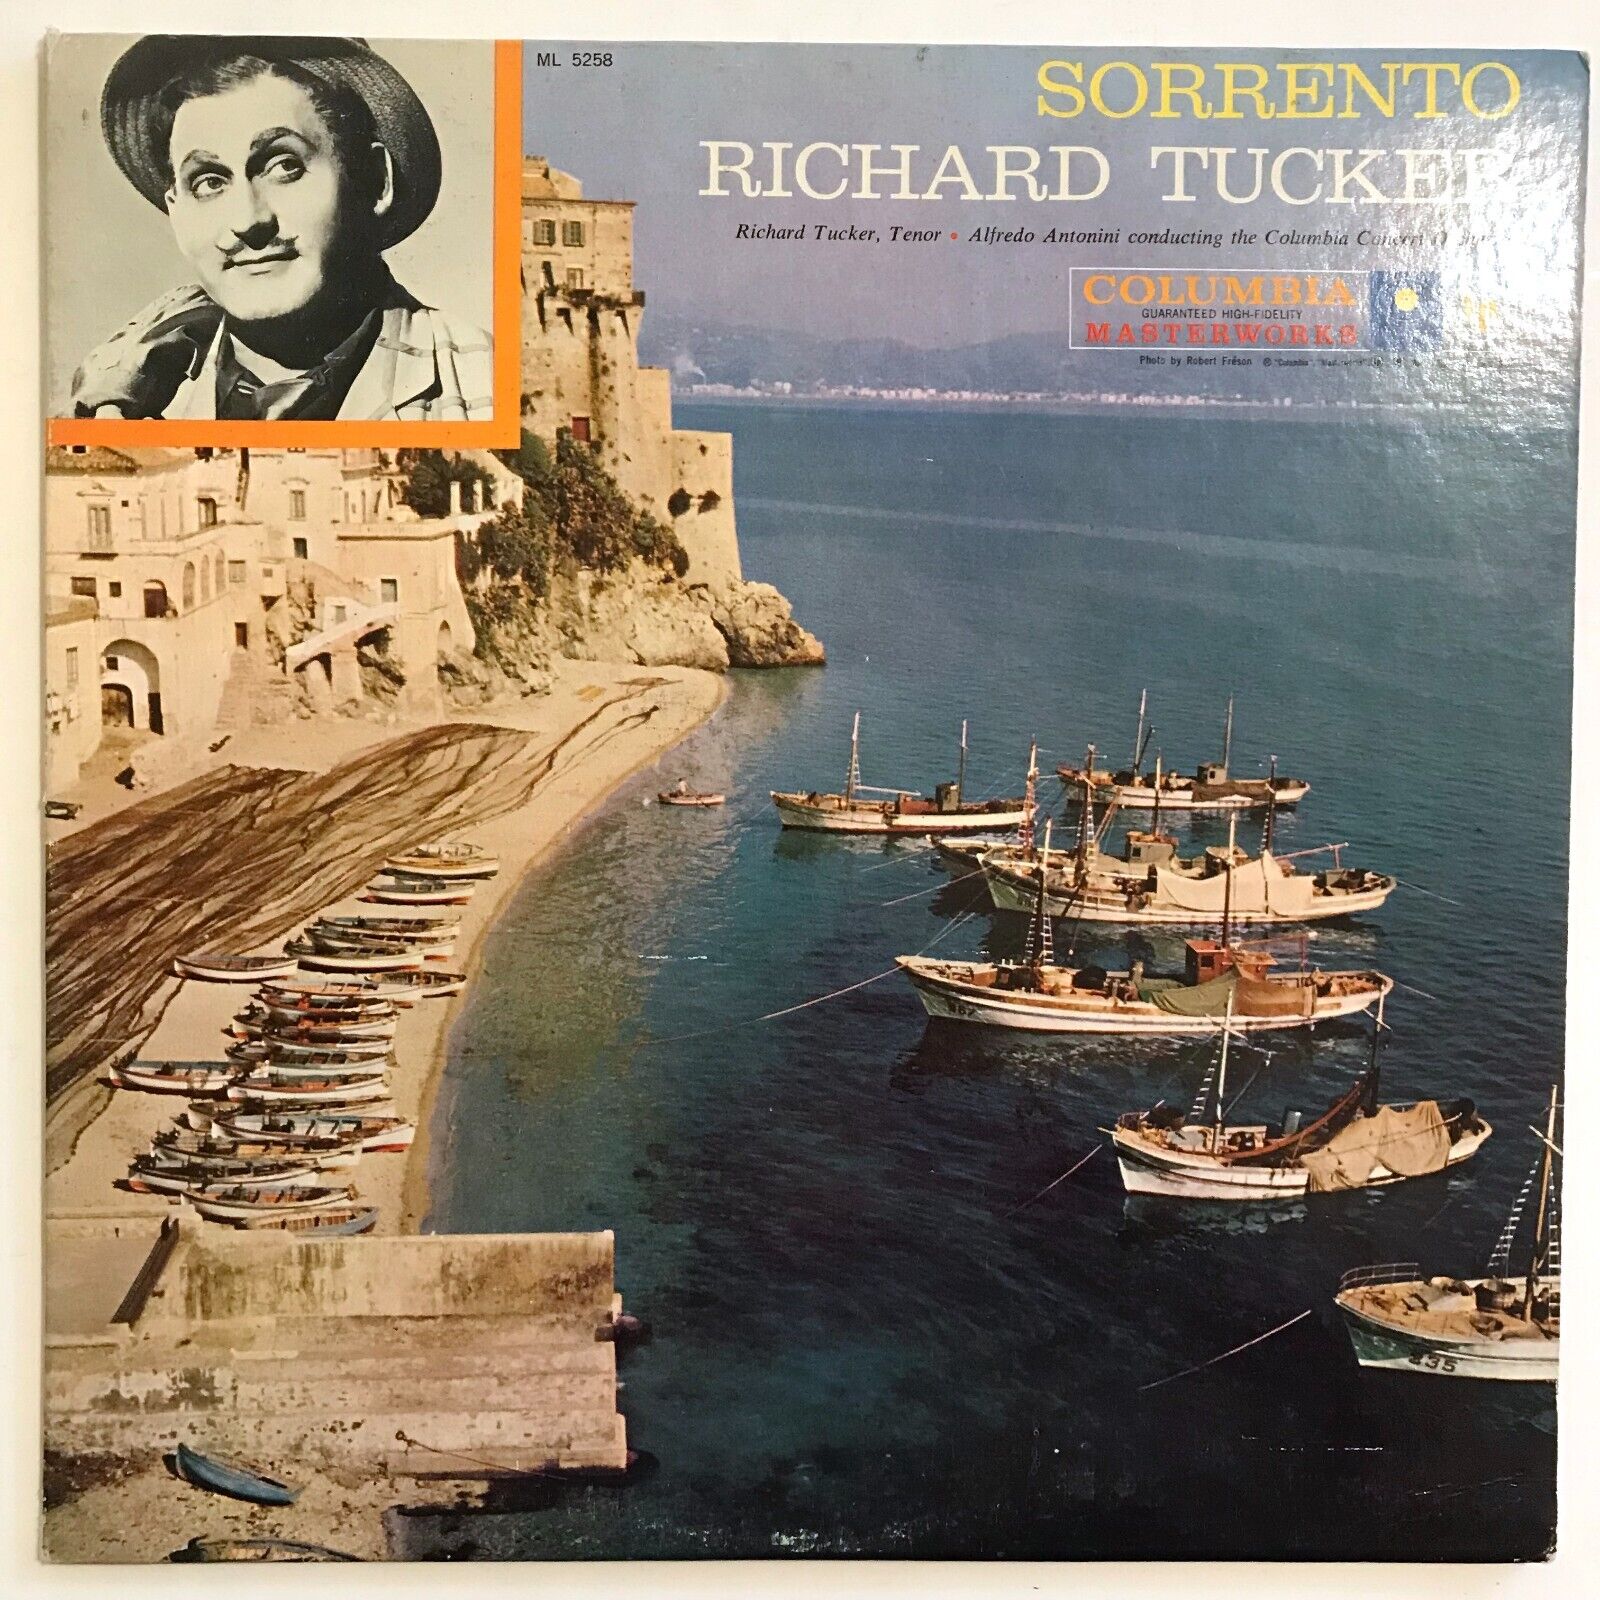 RICHARD TUCKER & ALFREDO ANTONINI Sorrento 1958 LP Columbia Masterworks #ML 5258